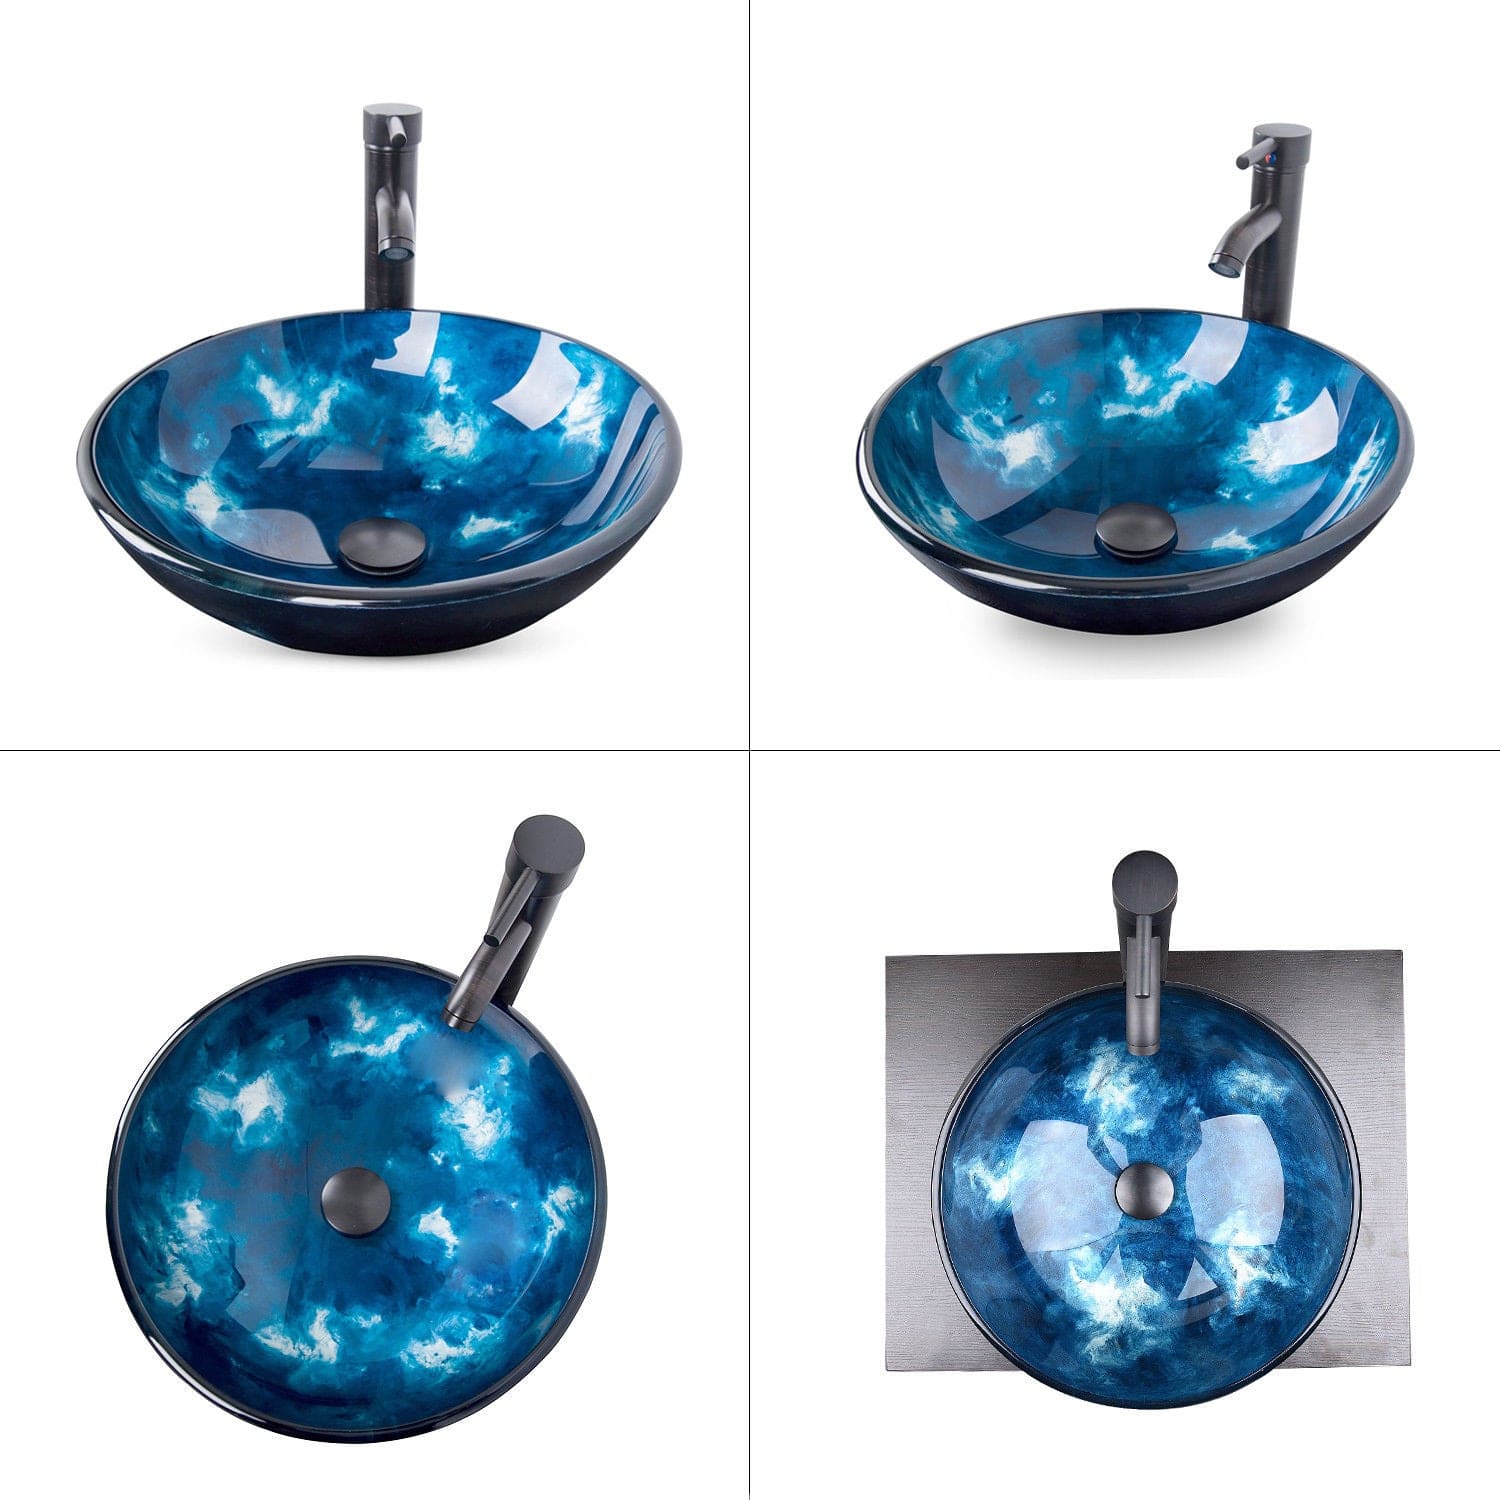 Elecwish Artistic Vessel Sink Bathroom Glass Bowl Faucet Drain Combo,Ocean Blue